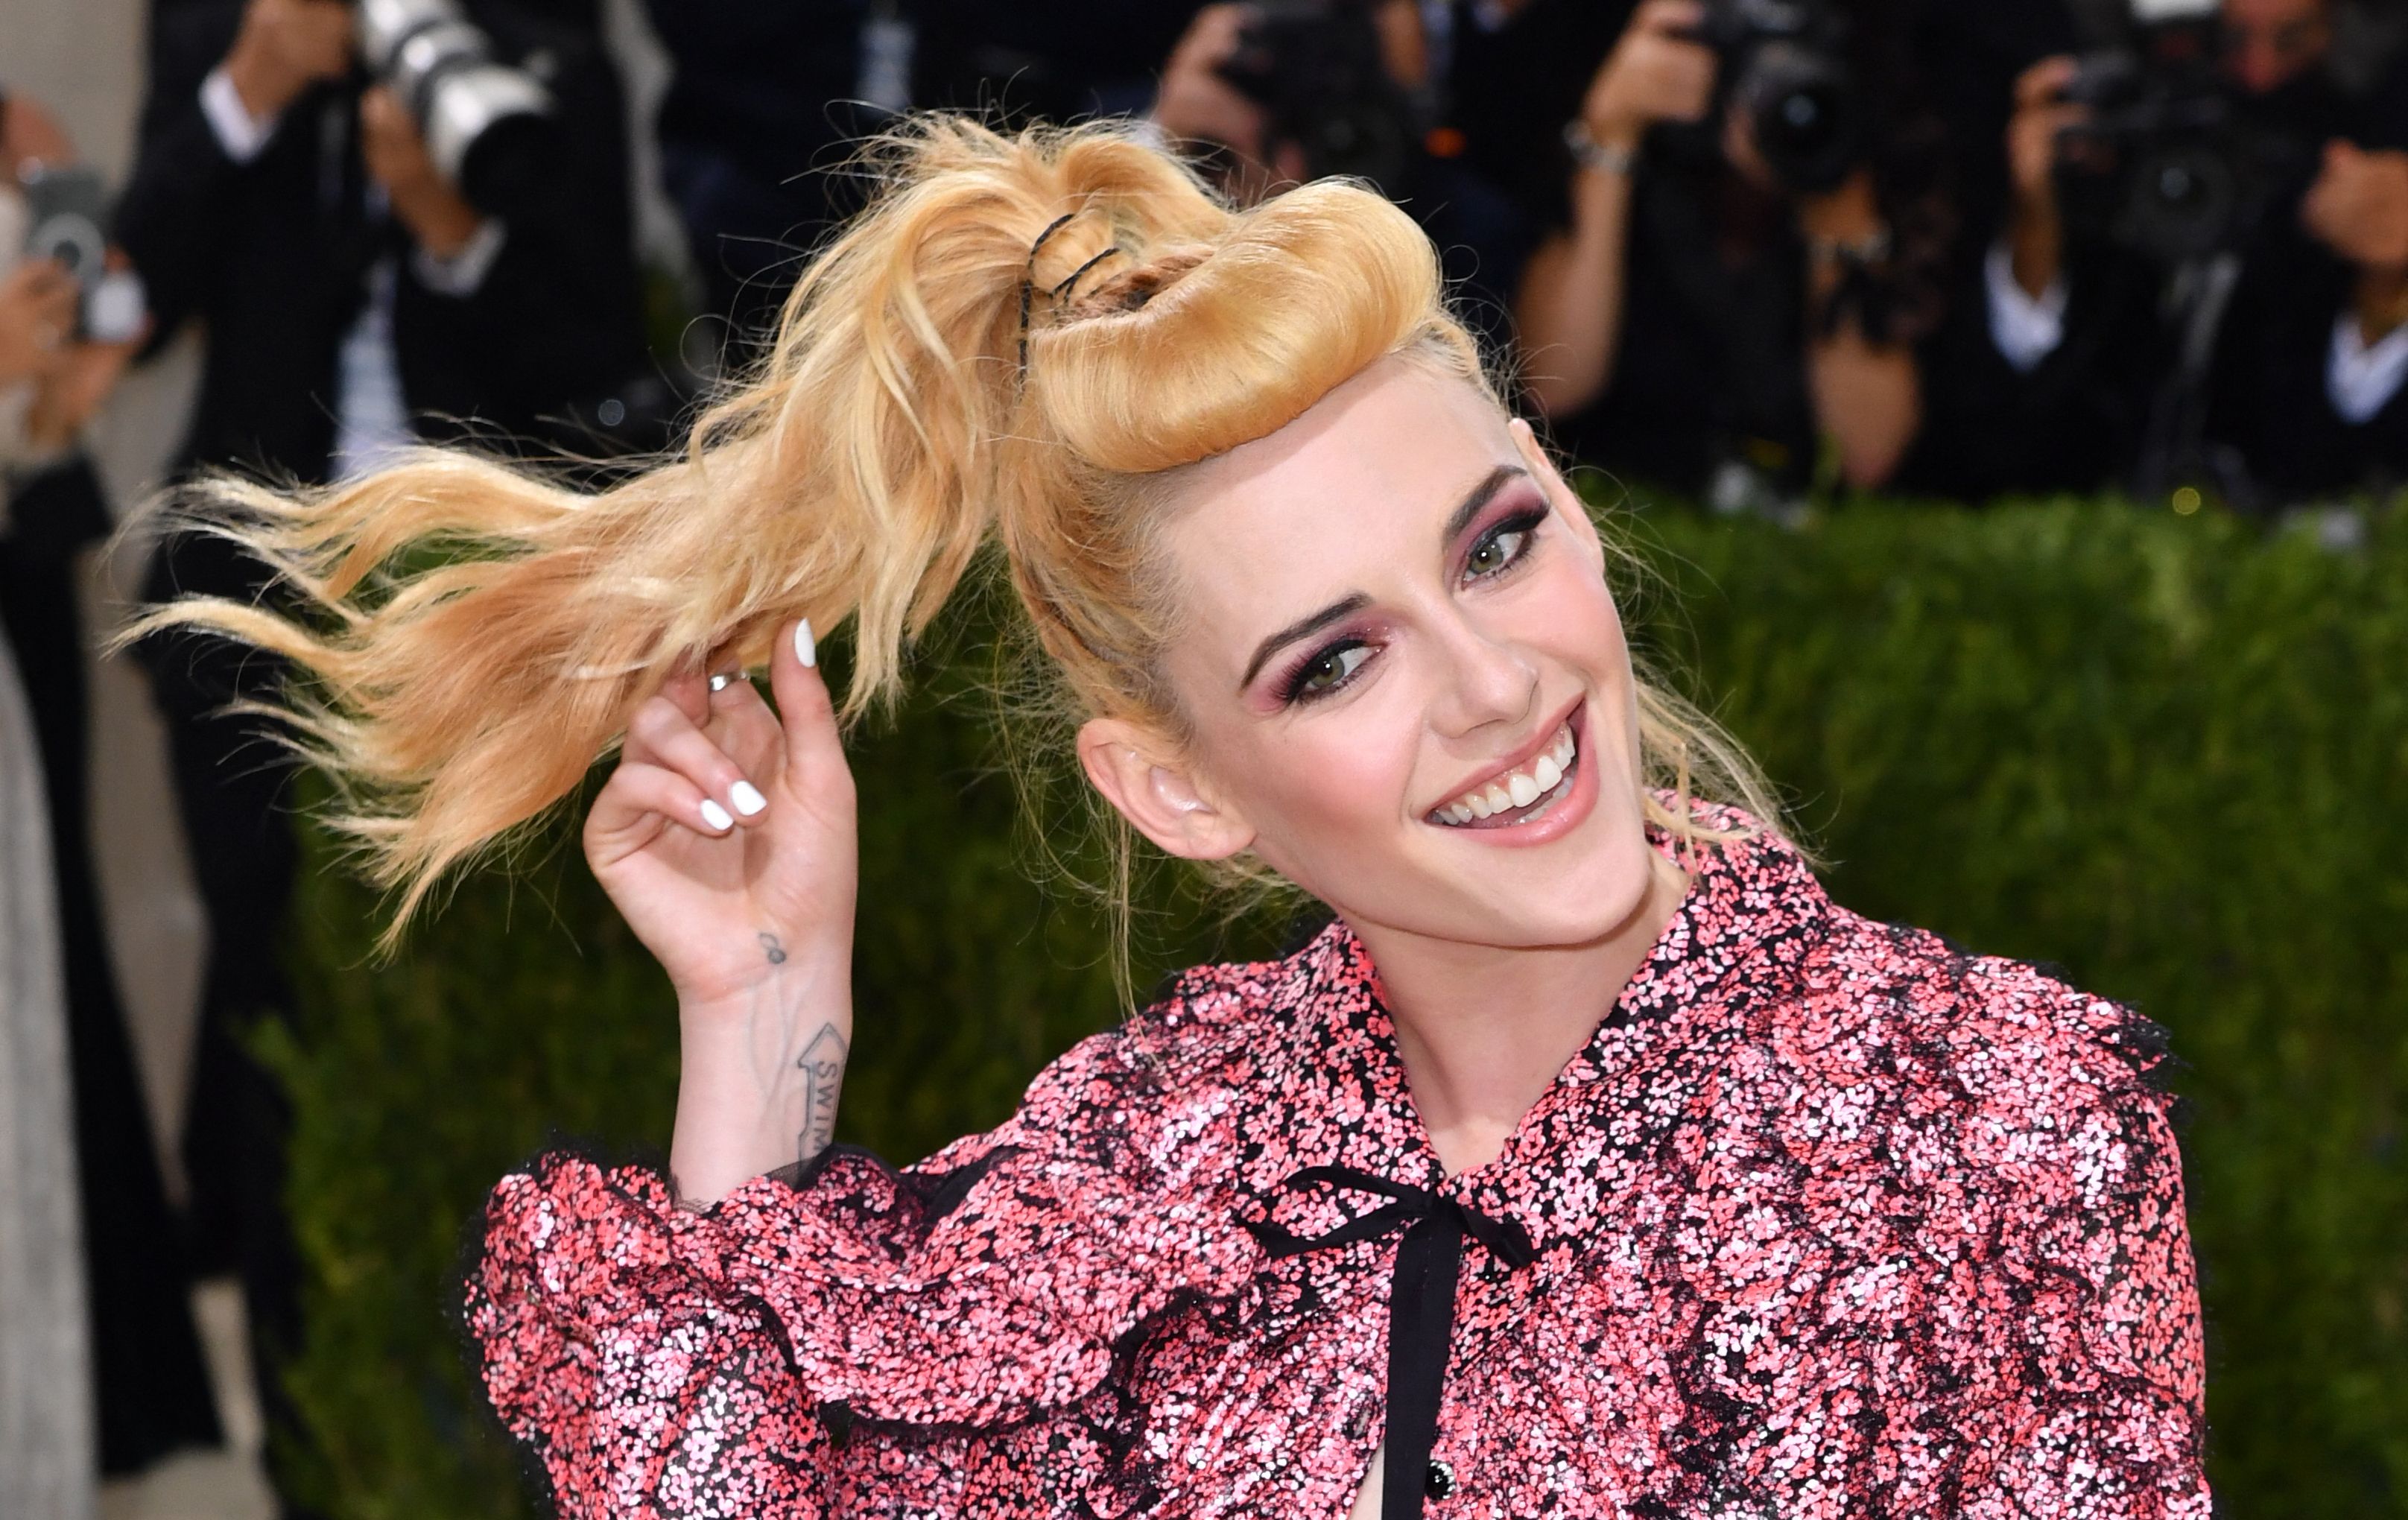 Kristen Stewart, star of the new Spencer movie, flips her ponytail hair at the Met Gala